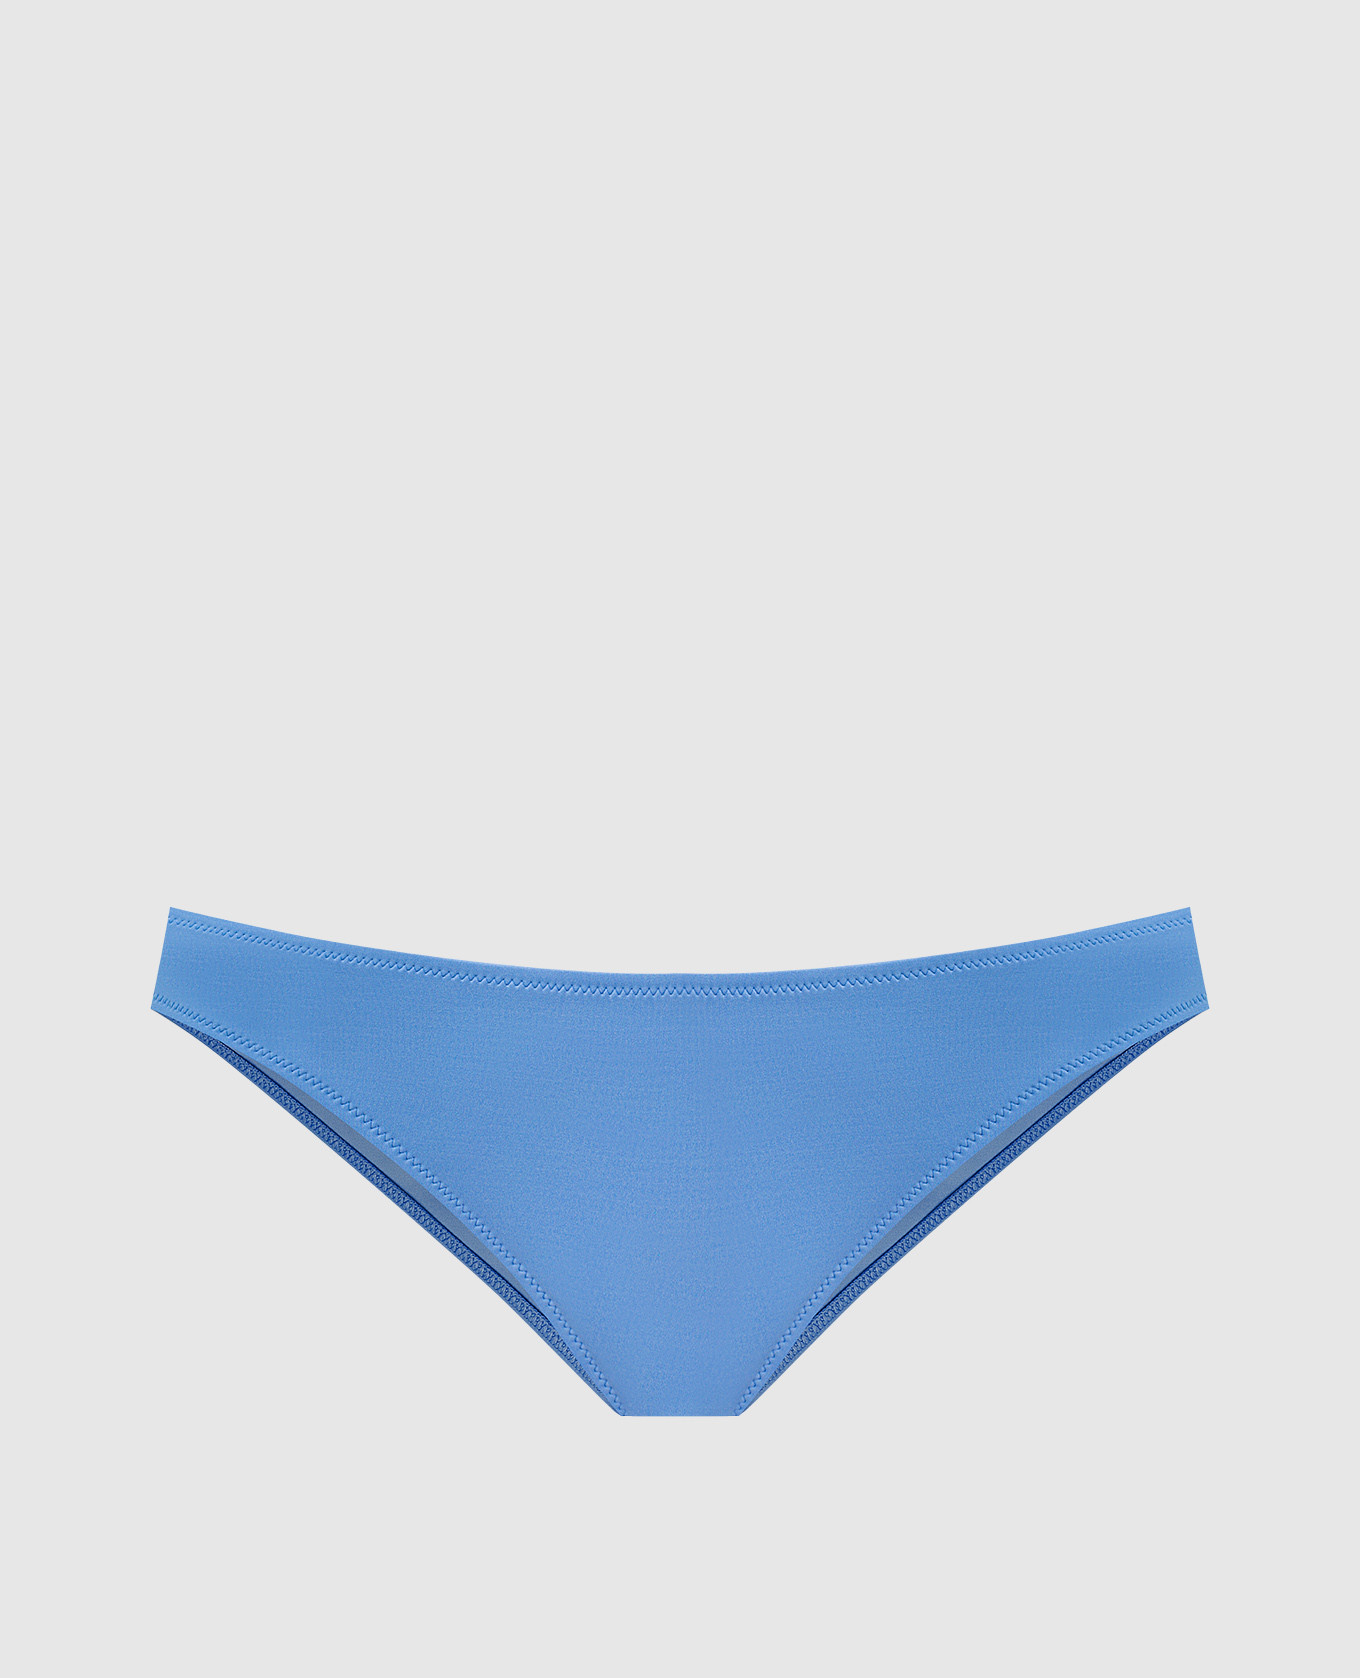 Blue panties from Frise swimwear